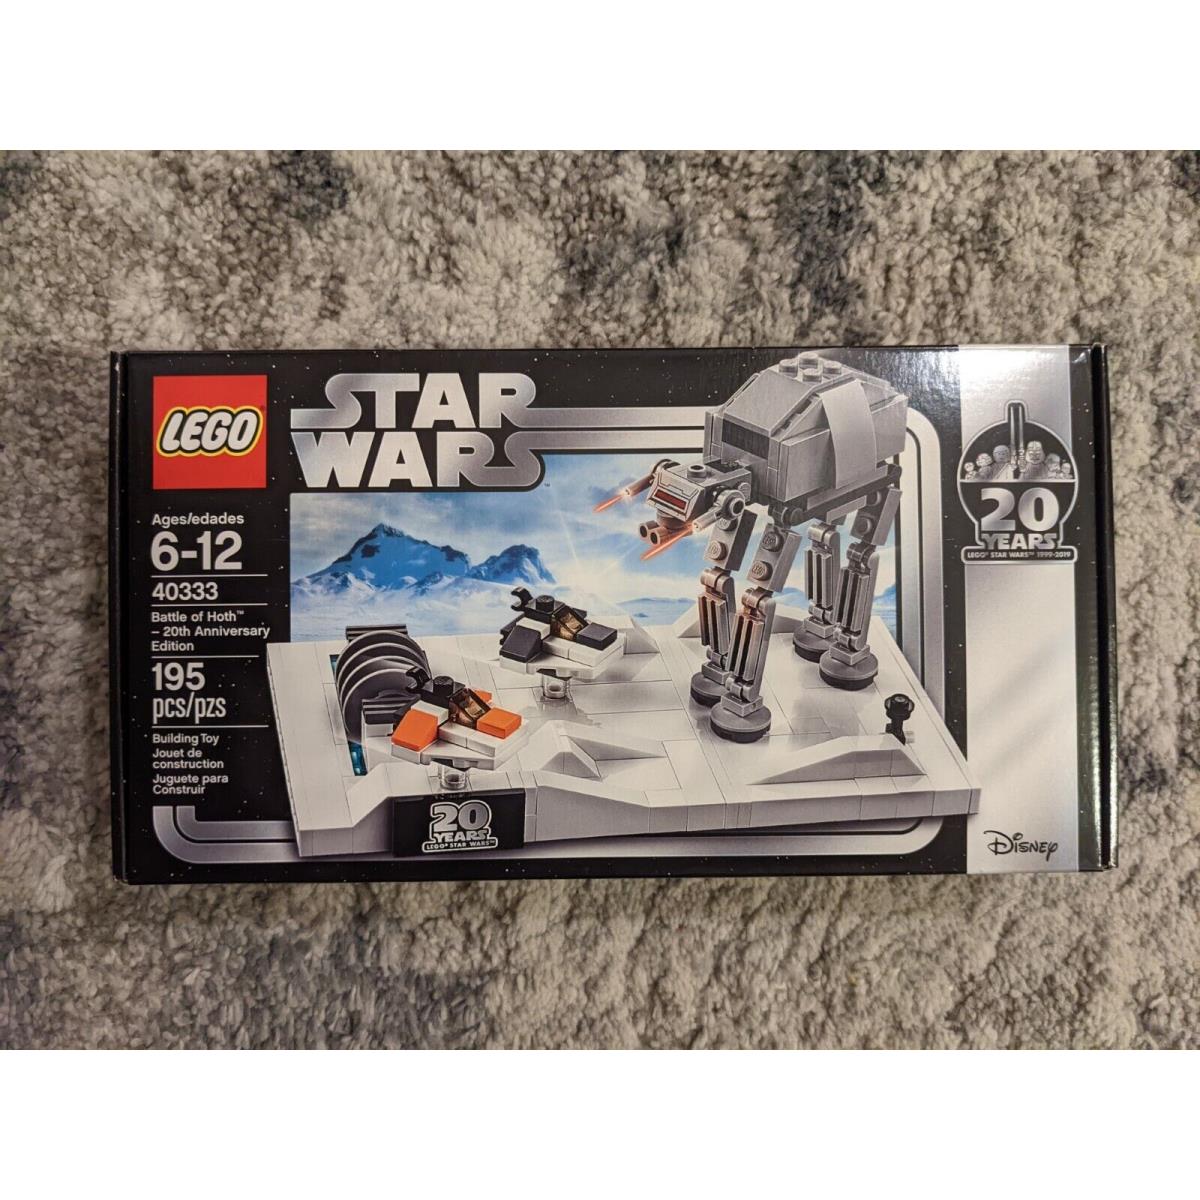 Lego 40333 Star Wars Battle of Hoth 20th Anniversary